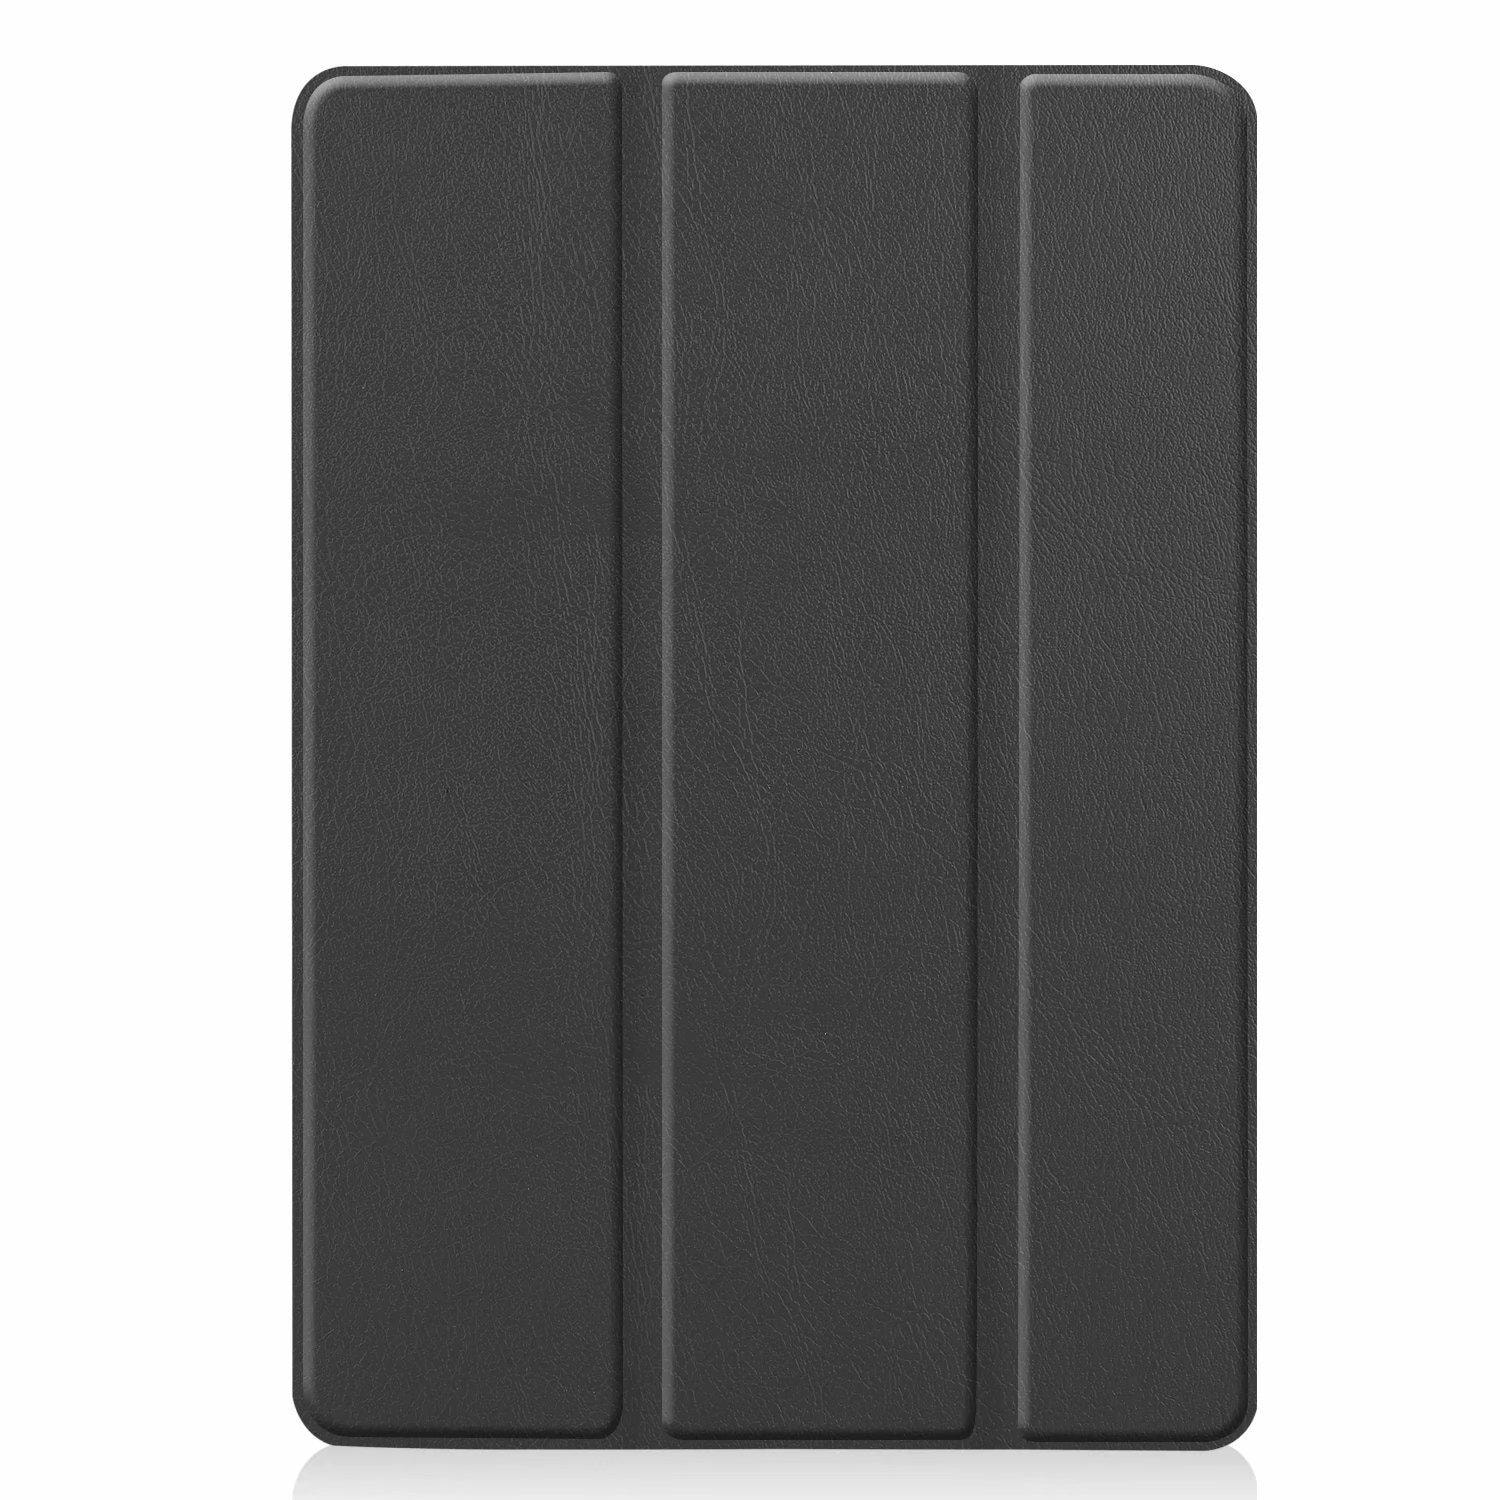 iPad fodral 10.2/10.5 tum Smart Cover Case - svart (15 av 18)